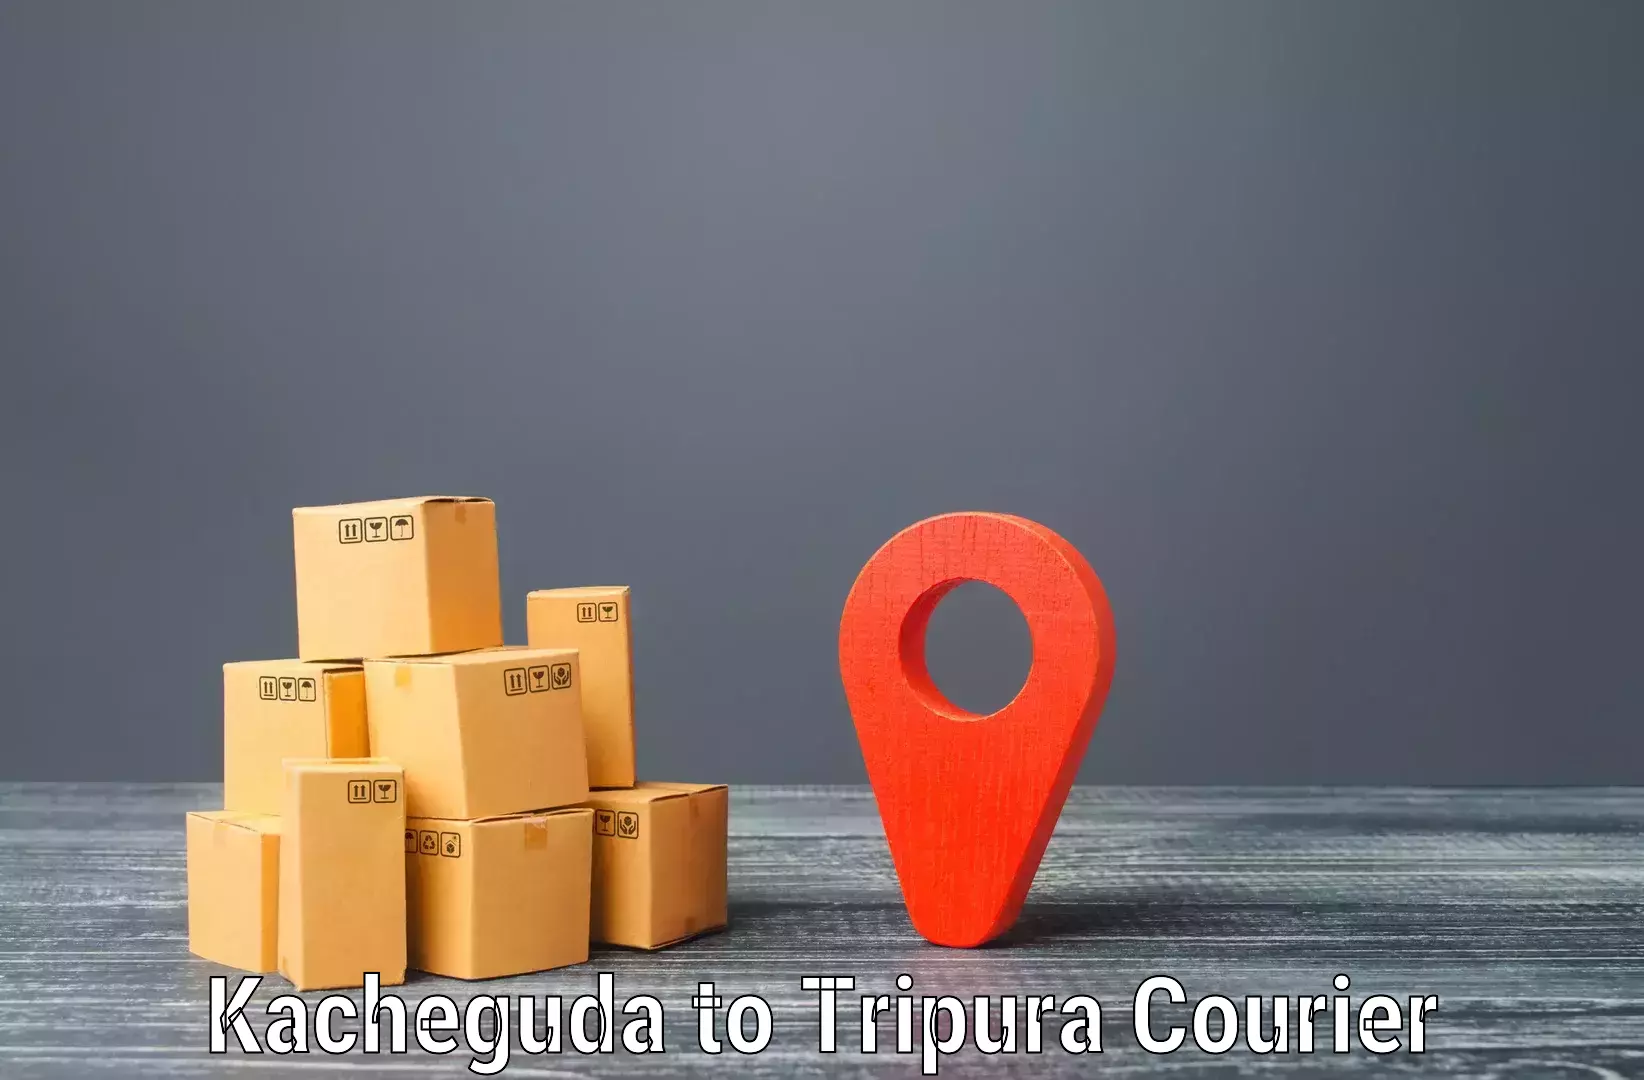 Global courier networks Kacheguda to Tripura